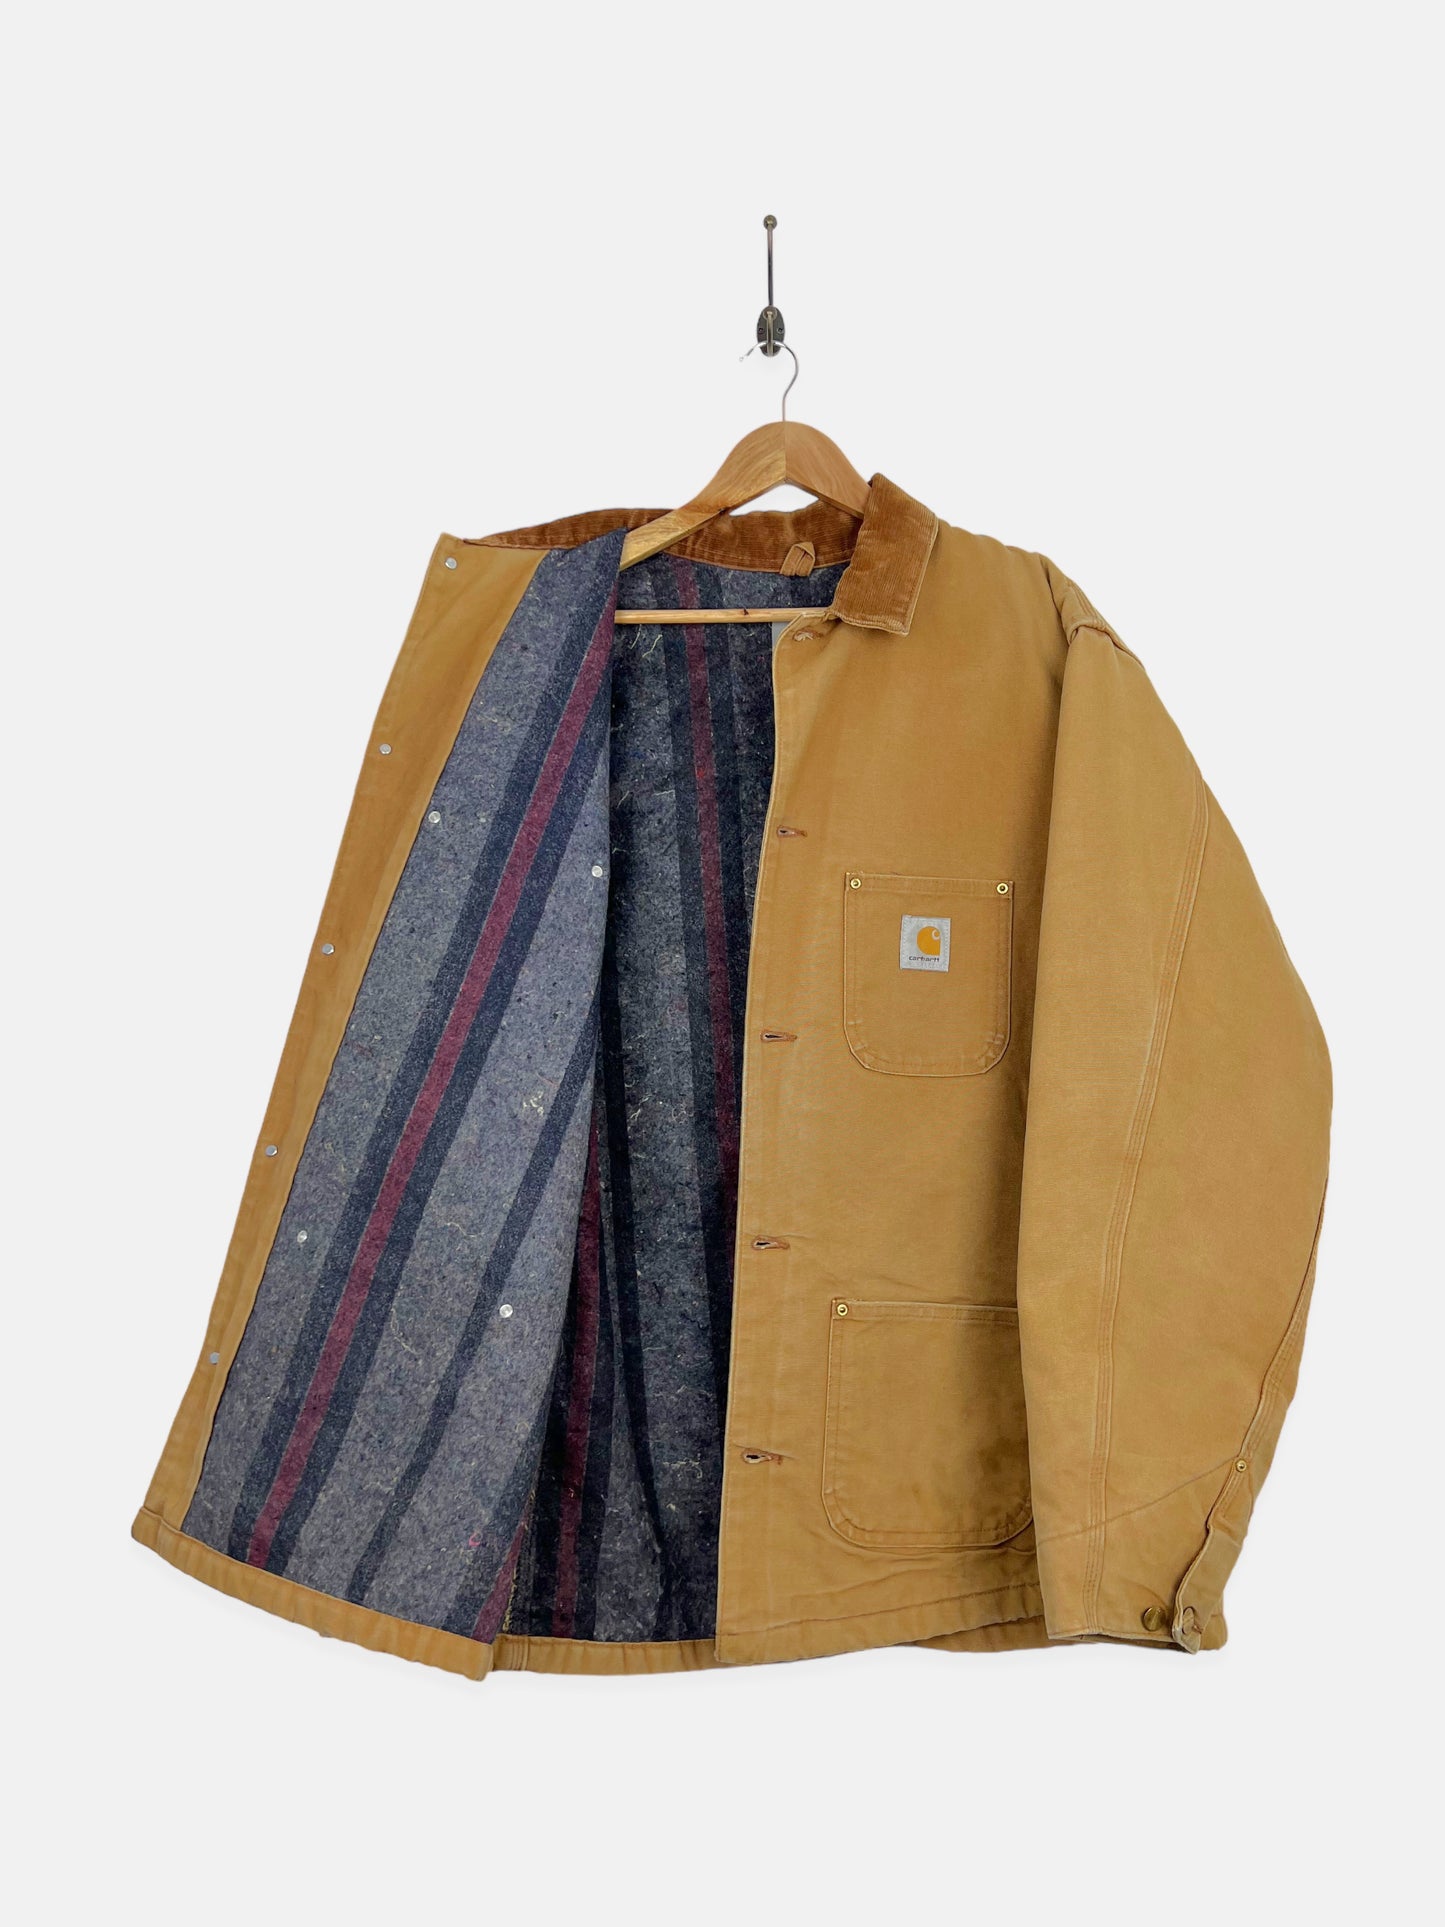 90's Carhartt Heavy Duty Lined Vintage Jacket Size 2-3XL